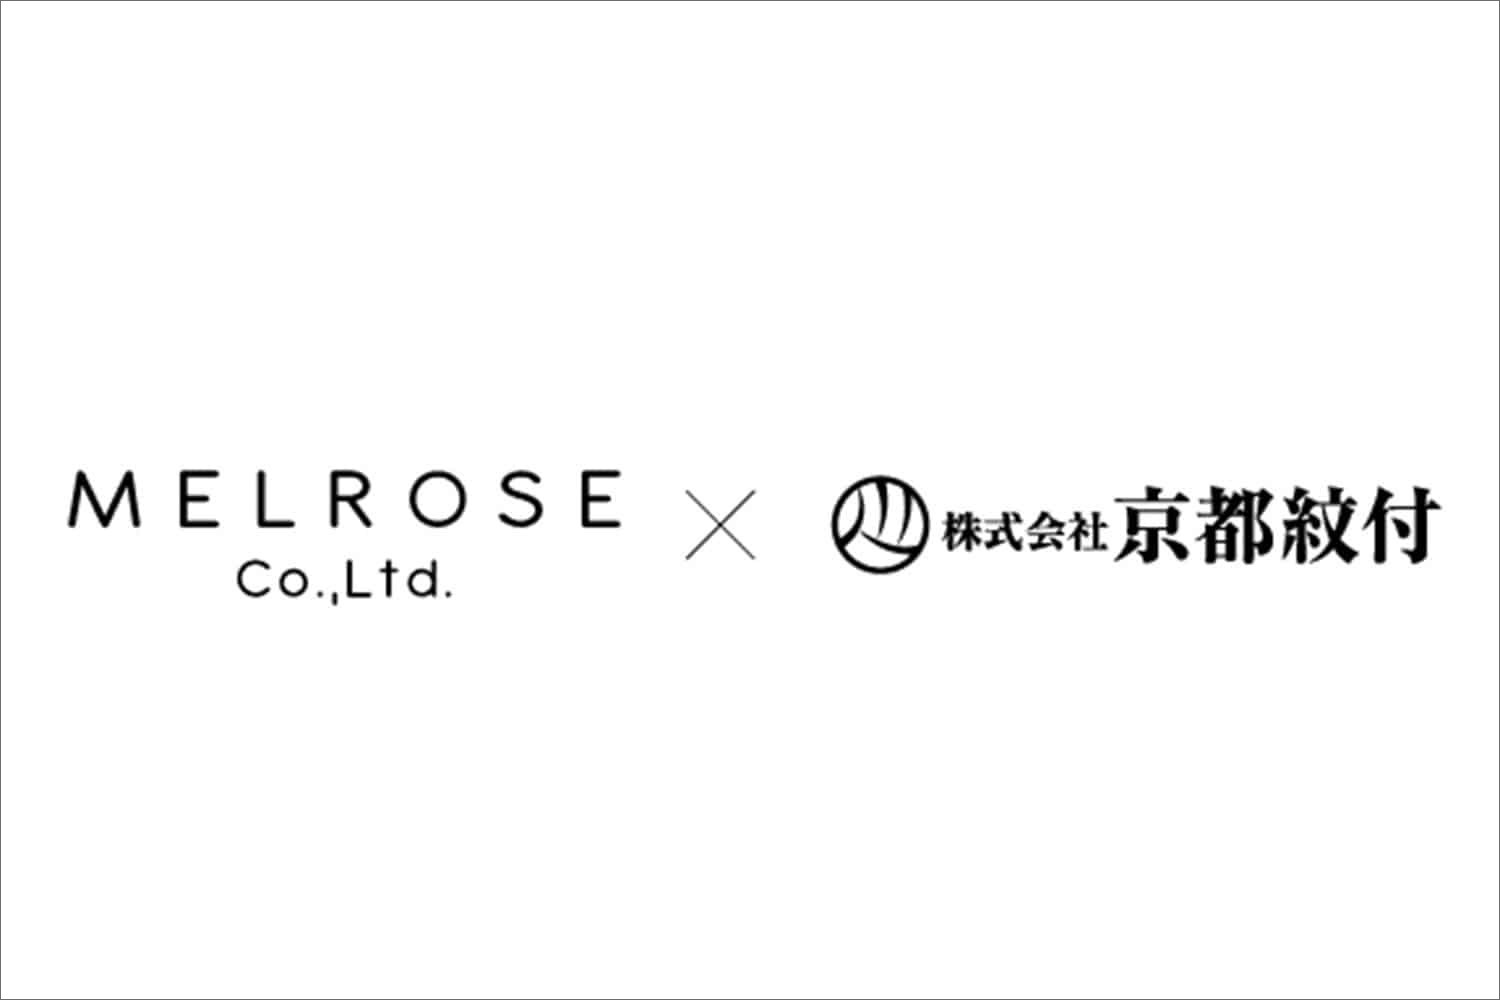 MELROSE 50th Anniversary 50のモノコト企画 京都紋付様との取り組み